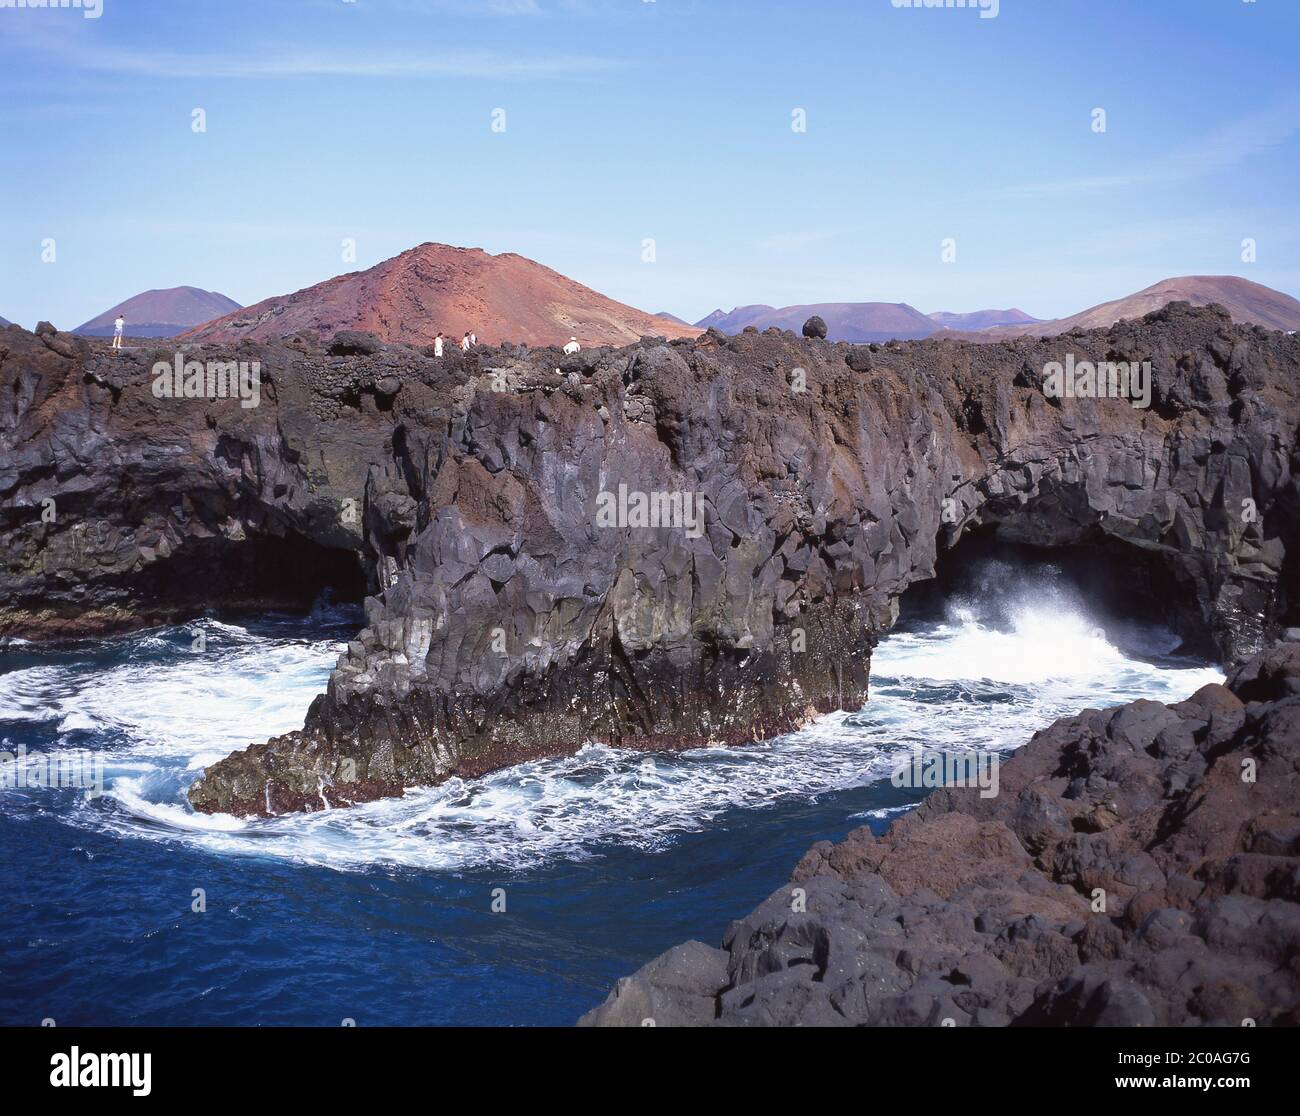 Grotte marine sulla costa rocciosa di Los Hervideros, vicino a El Golfo, Lanzarote, Isole Canarie, Spagna Foto Stock